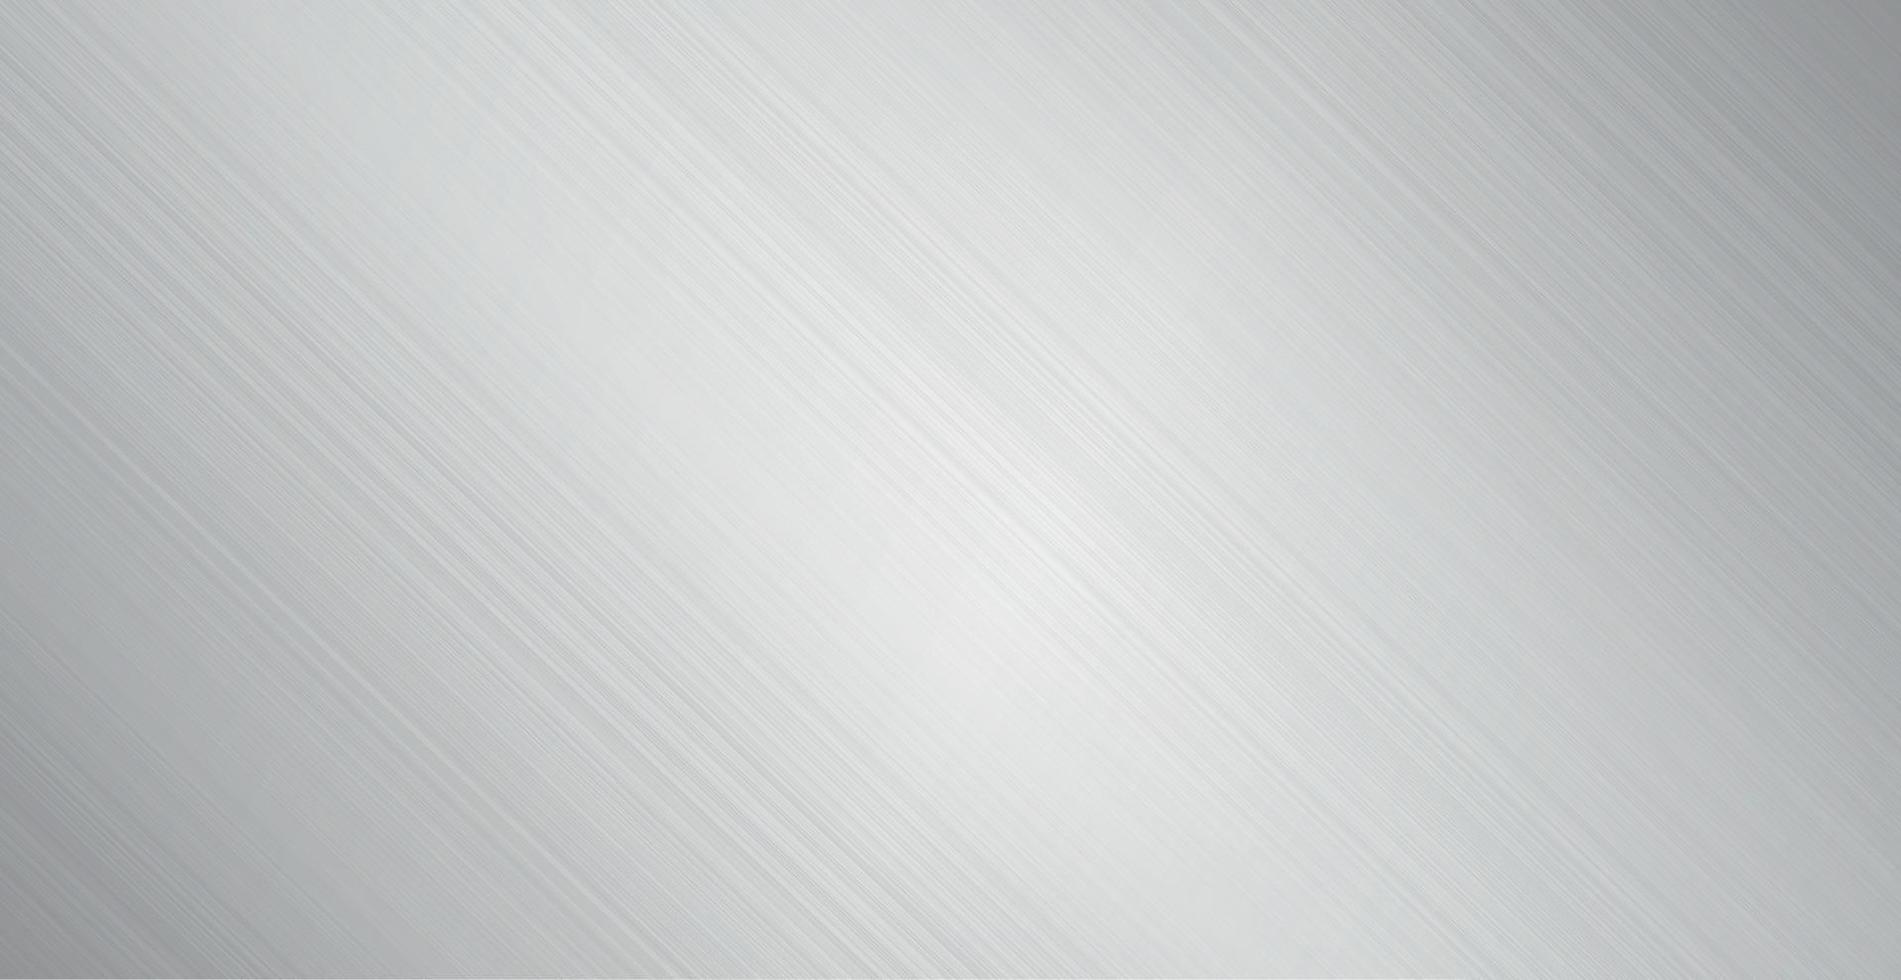 panoramautsikt bakgrund silver stål metall textur - vektor